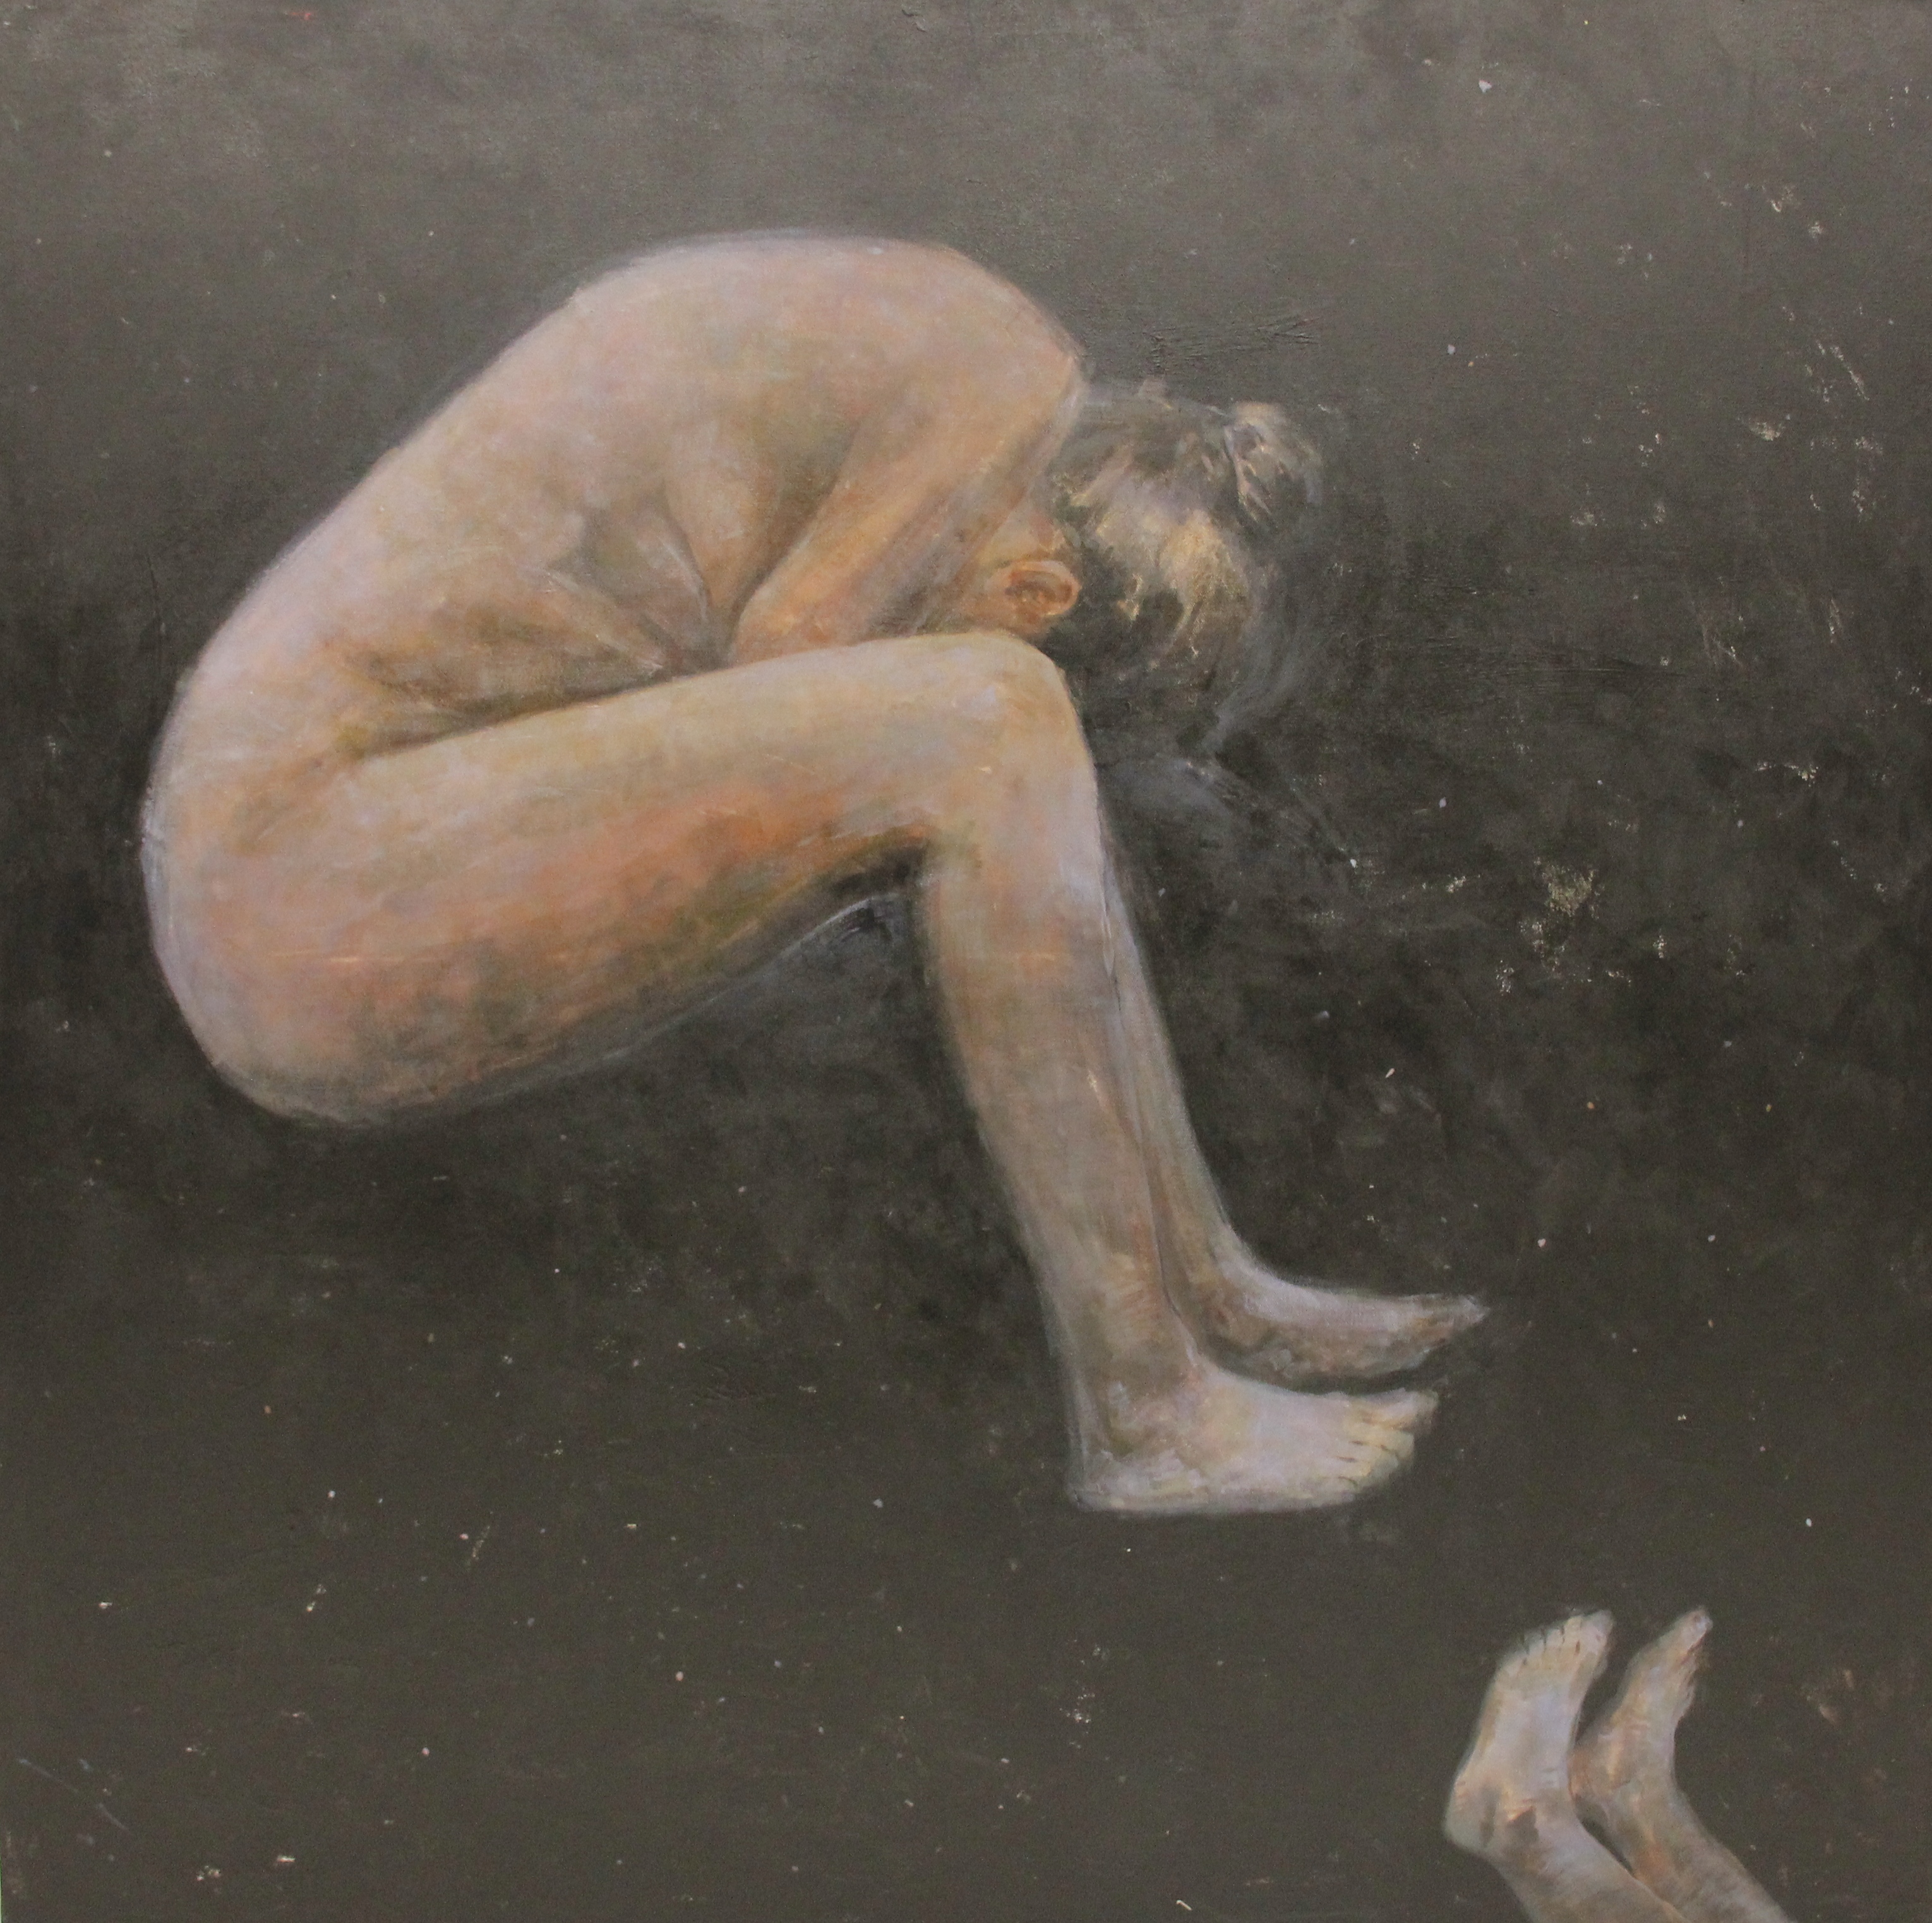 İsimsiz- Untitled, 2009, Tuval üzerine yağlıboya- Oil on canvas, 150x150 cm